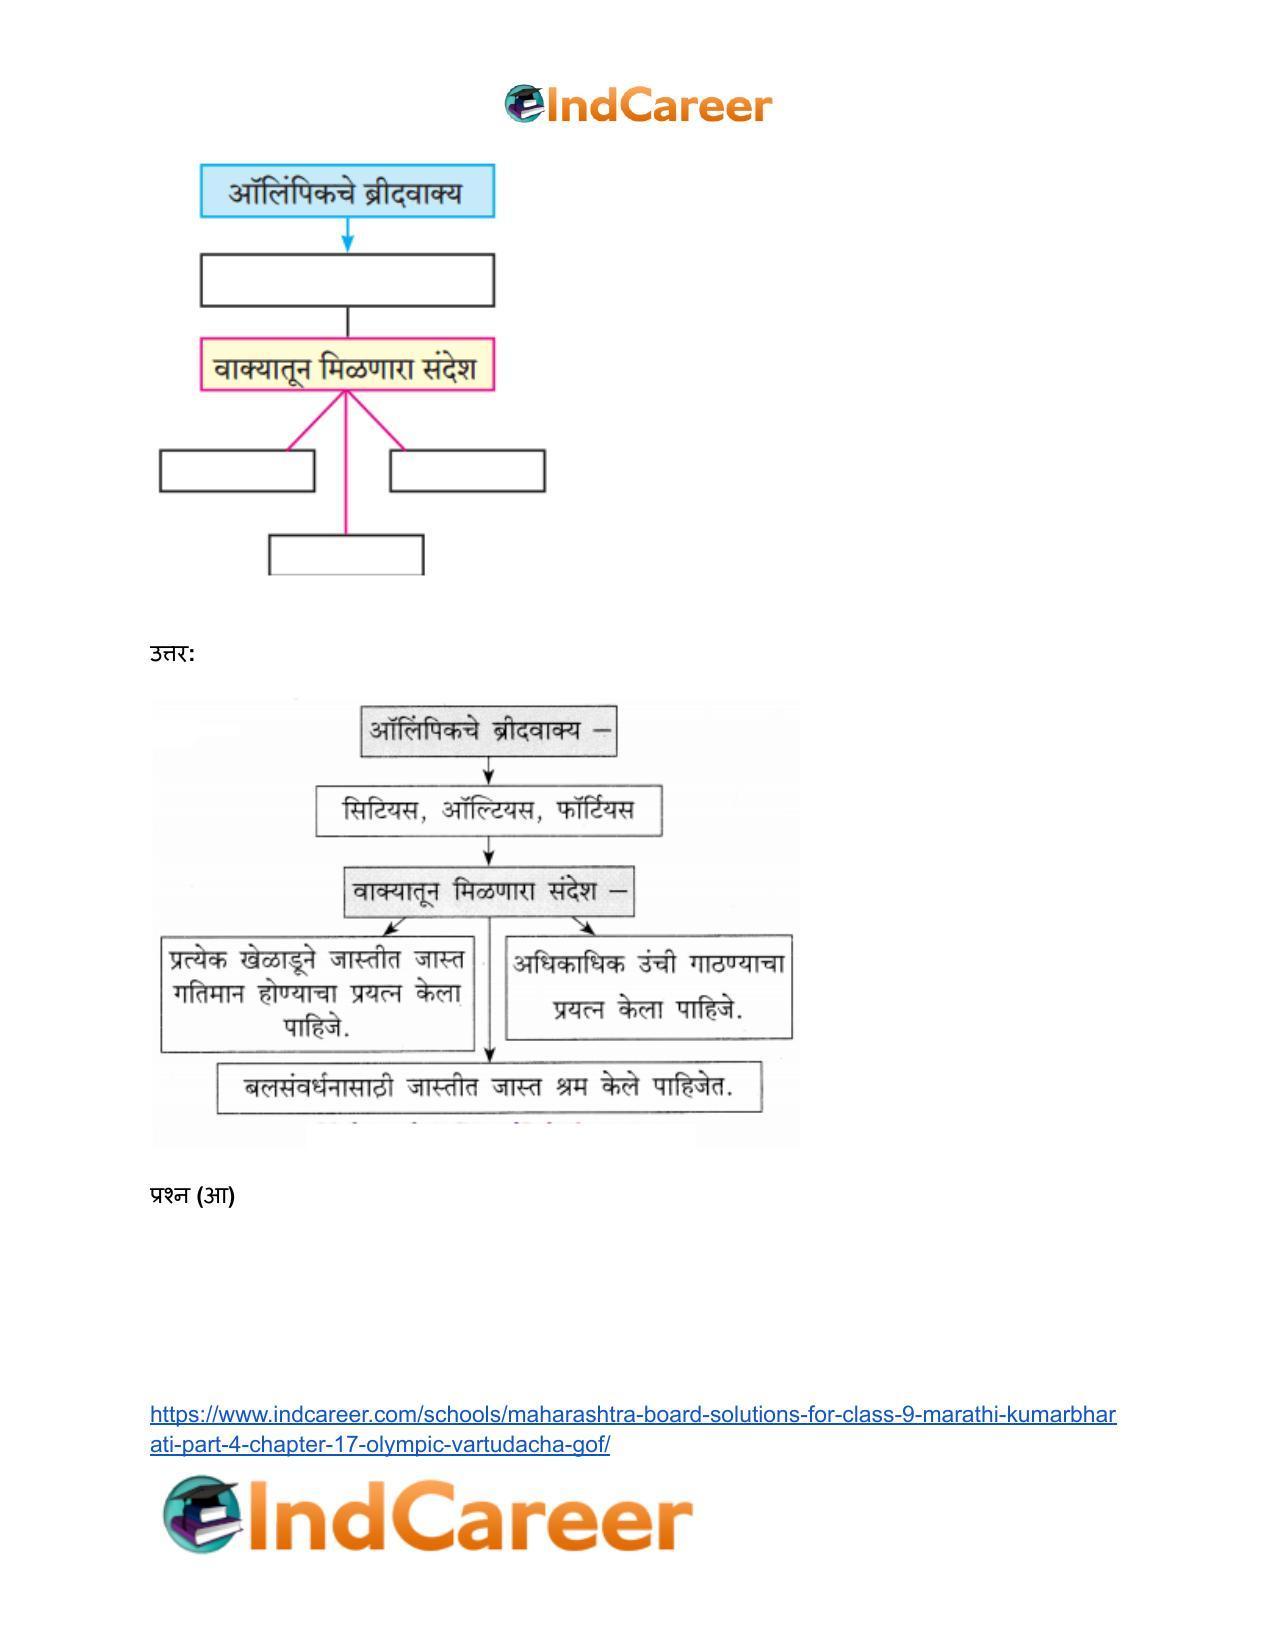 Maharashtra Board Solutions for Class 9- Marathi Kumarbharati (Part- 4): Chapter 17- ऑलिंपिक वर्तुळांचा गोफ - Page 3